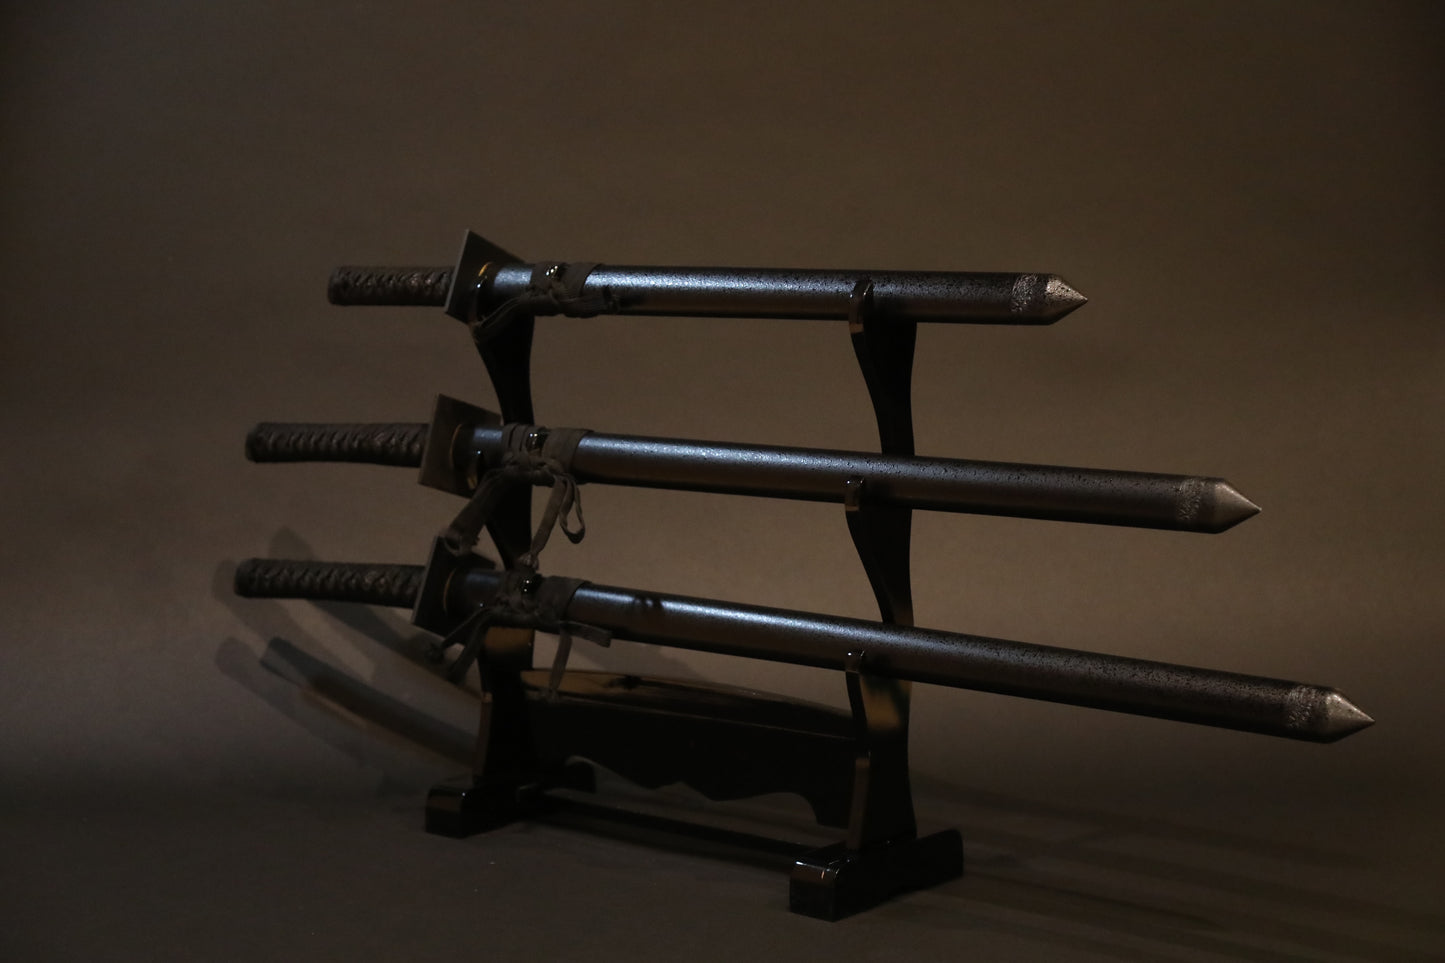 Ninja sword "SHINOBI KATANA" (Imitation)